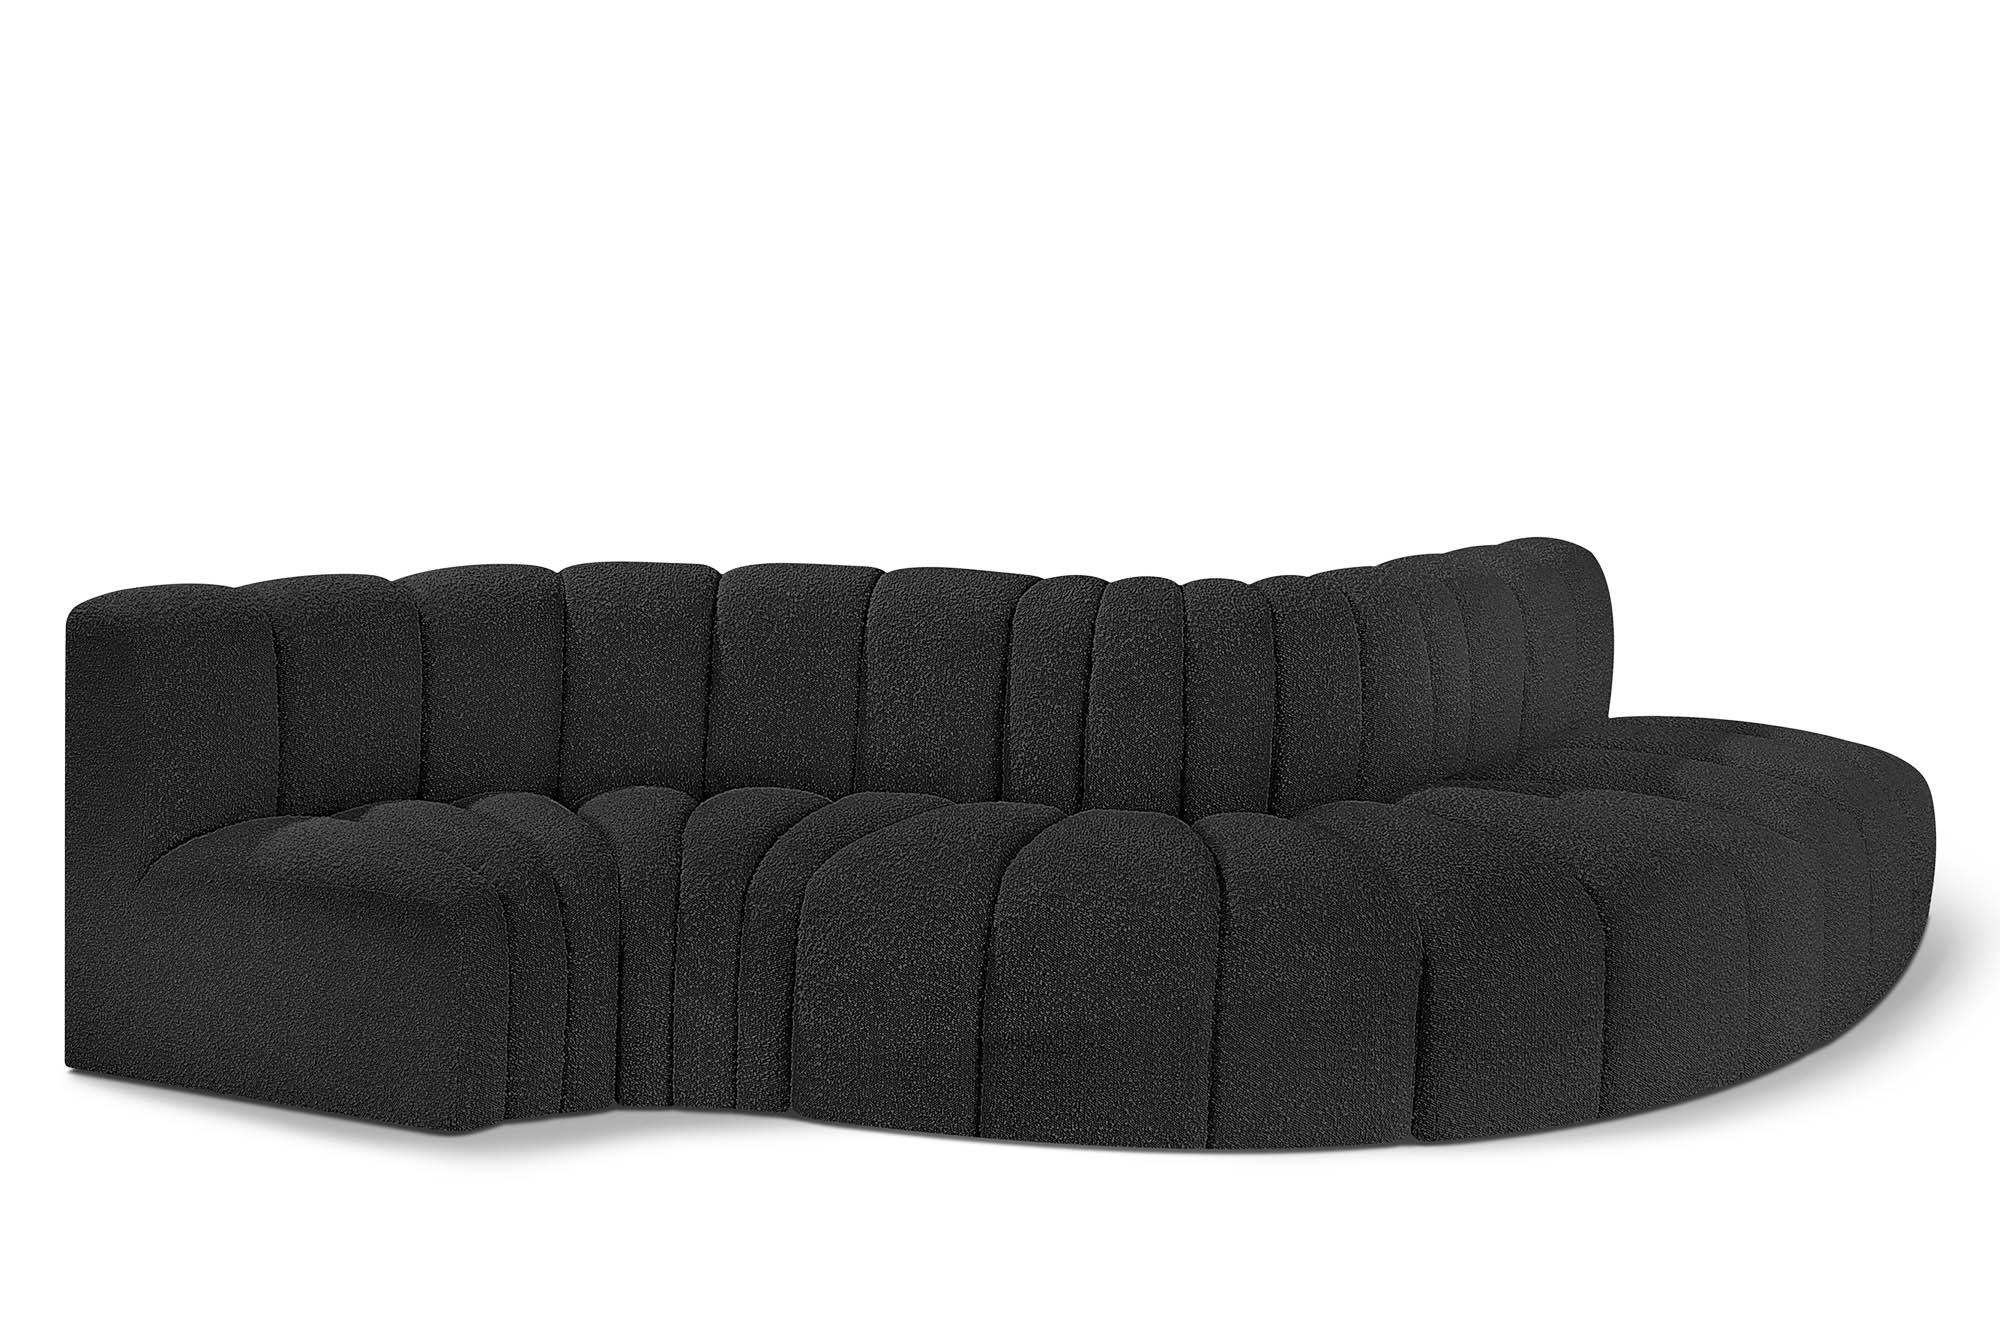 Contemporary, Modern Modular Sectional Sofa ARC 102Black-S5B 102Black-S5B in Black 